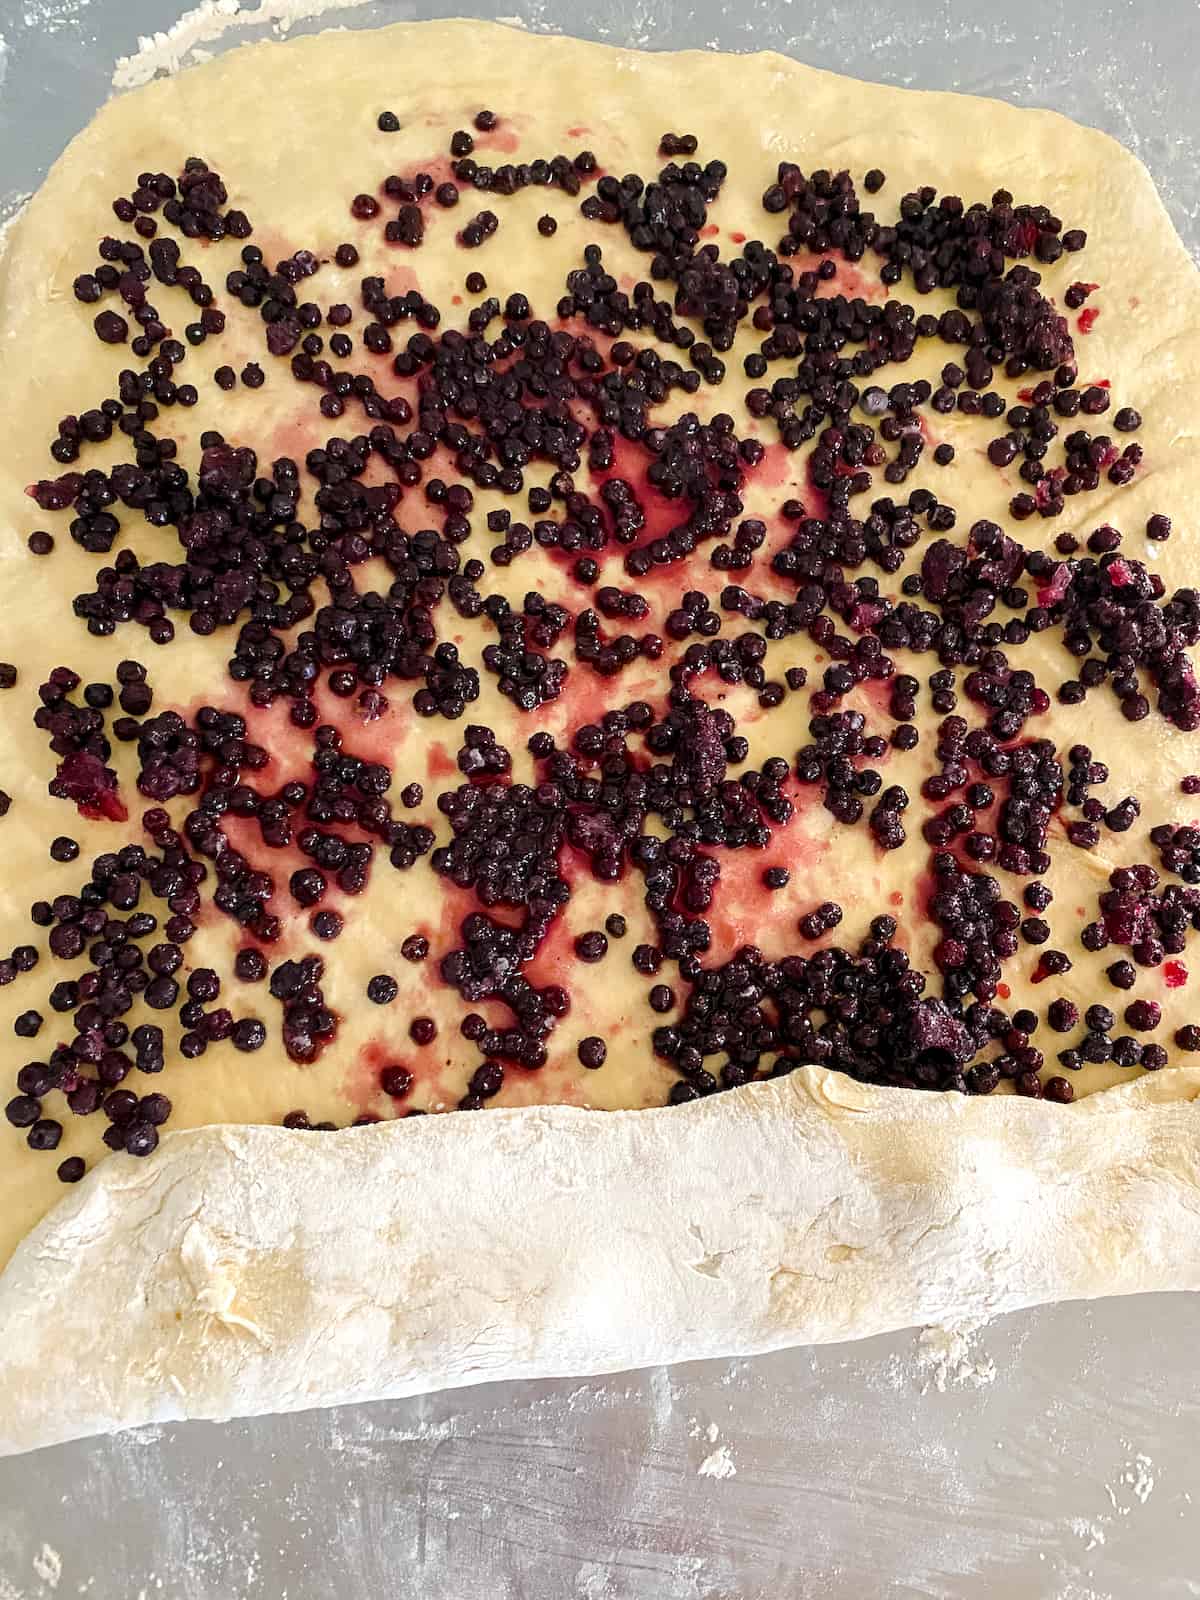 Blueberries spread over dough.